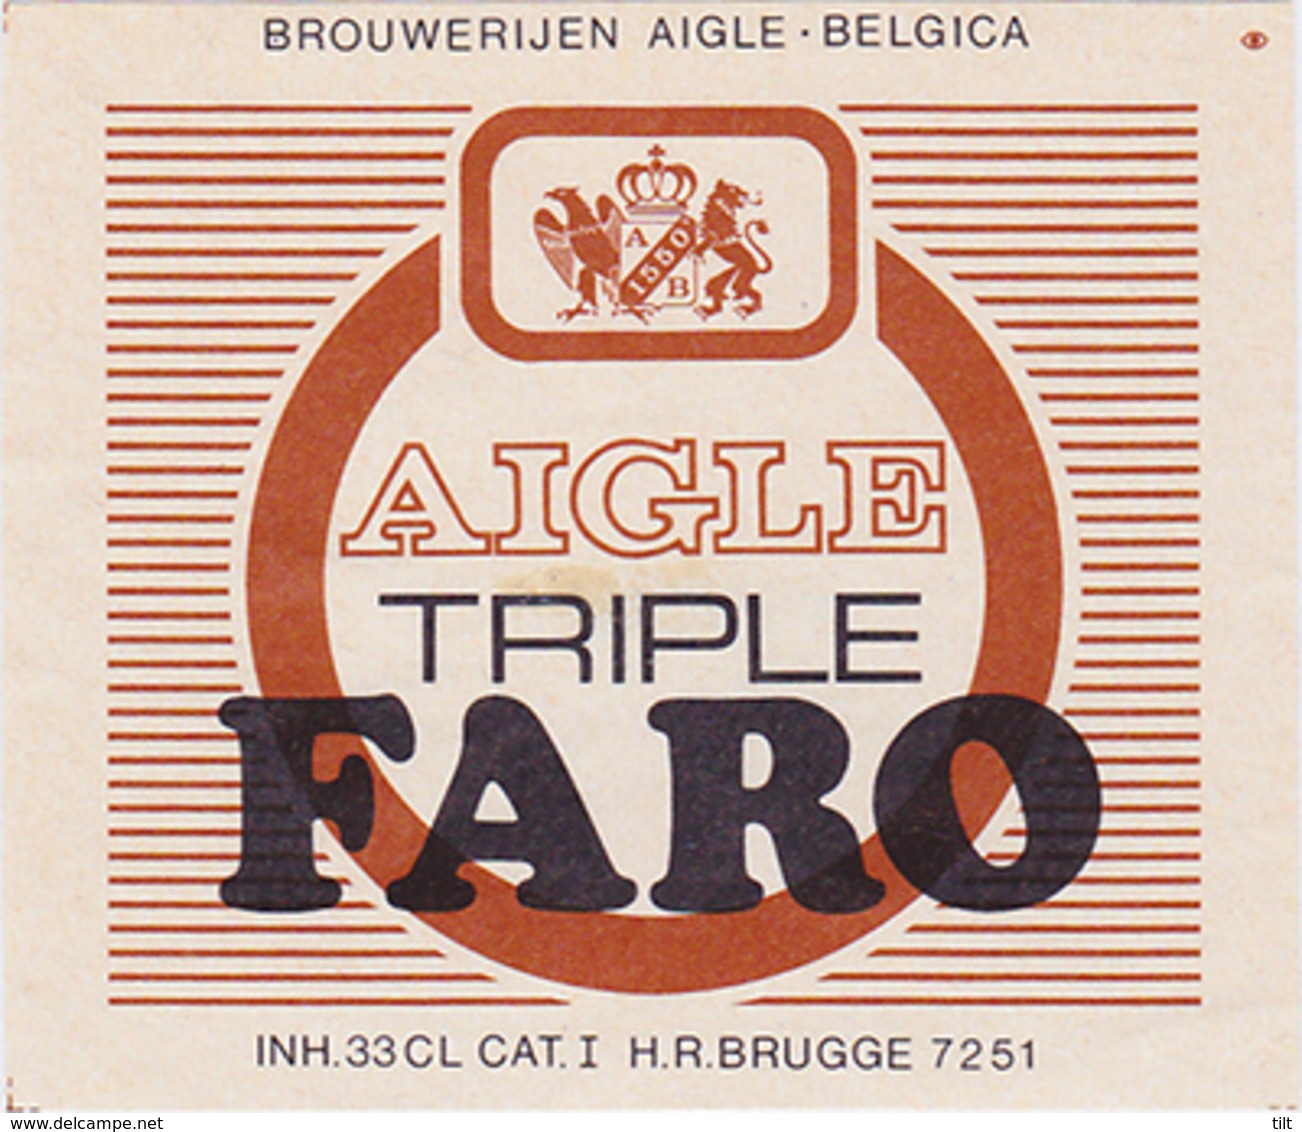 Br. Aigle-Belgica (Brugge) - Aigle Triple Faro Kruger - Bière